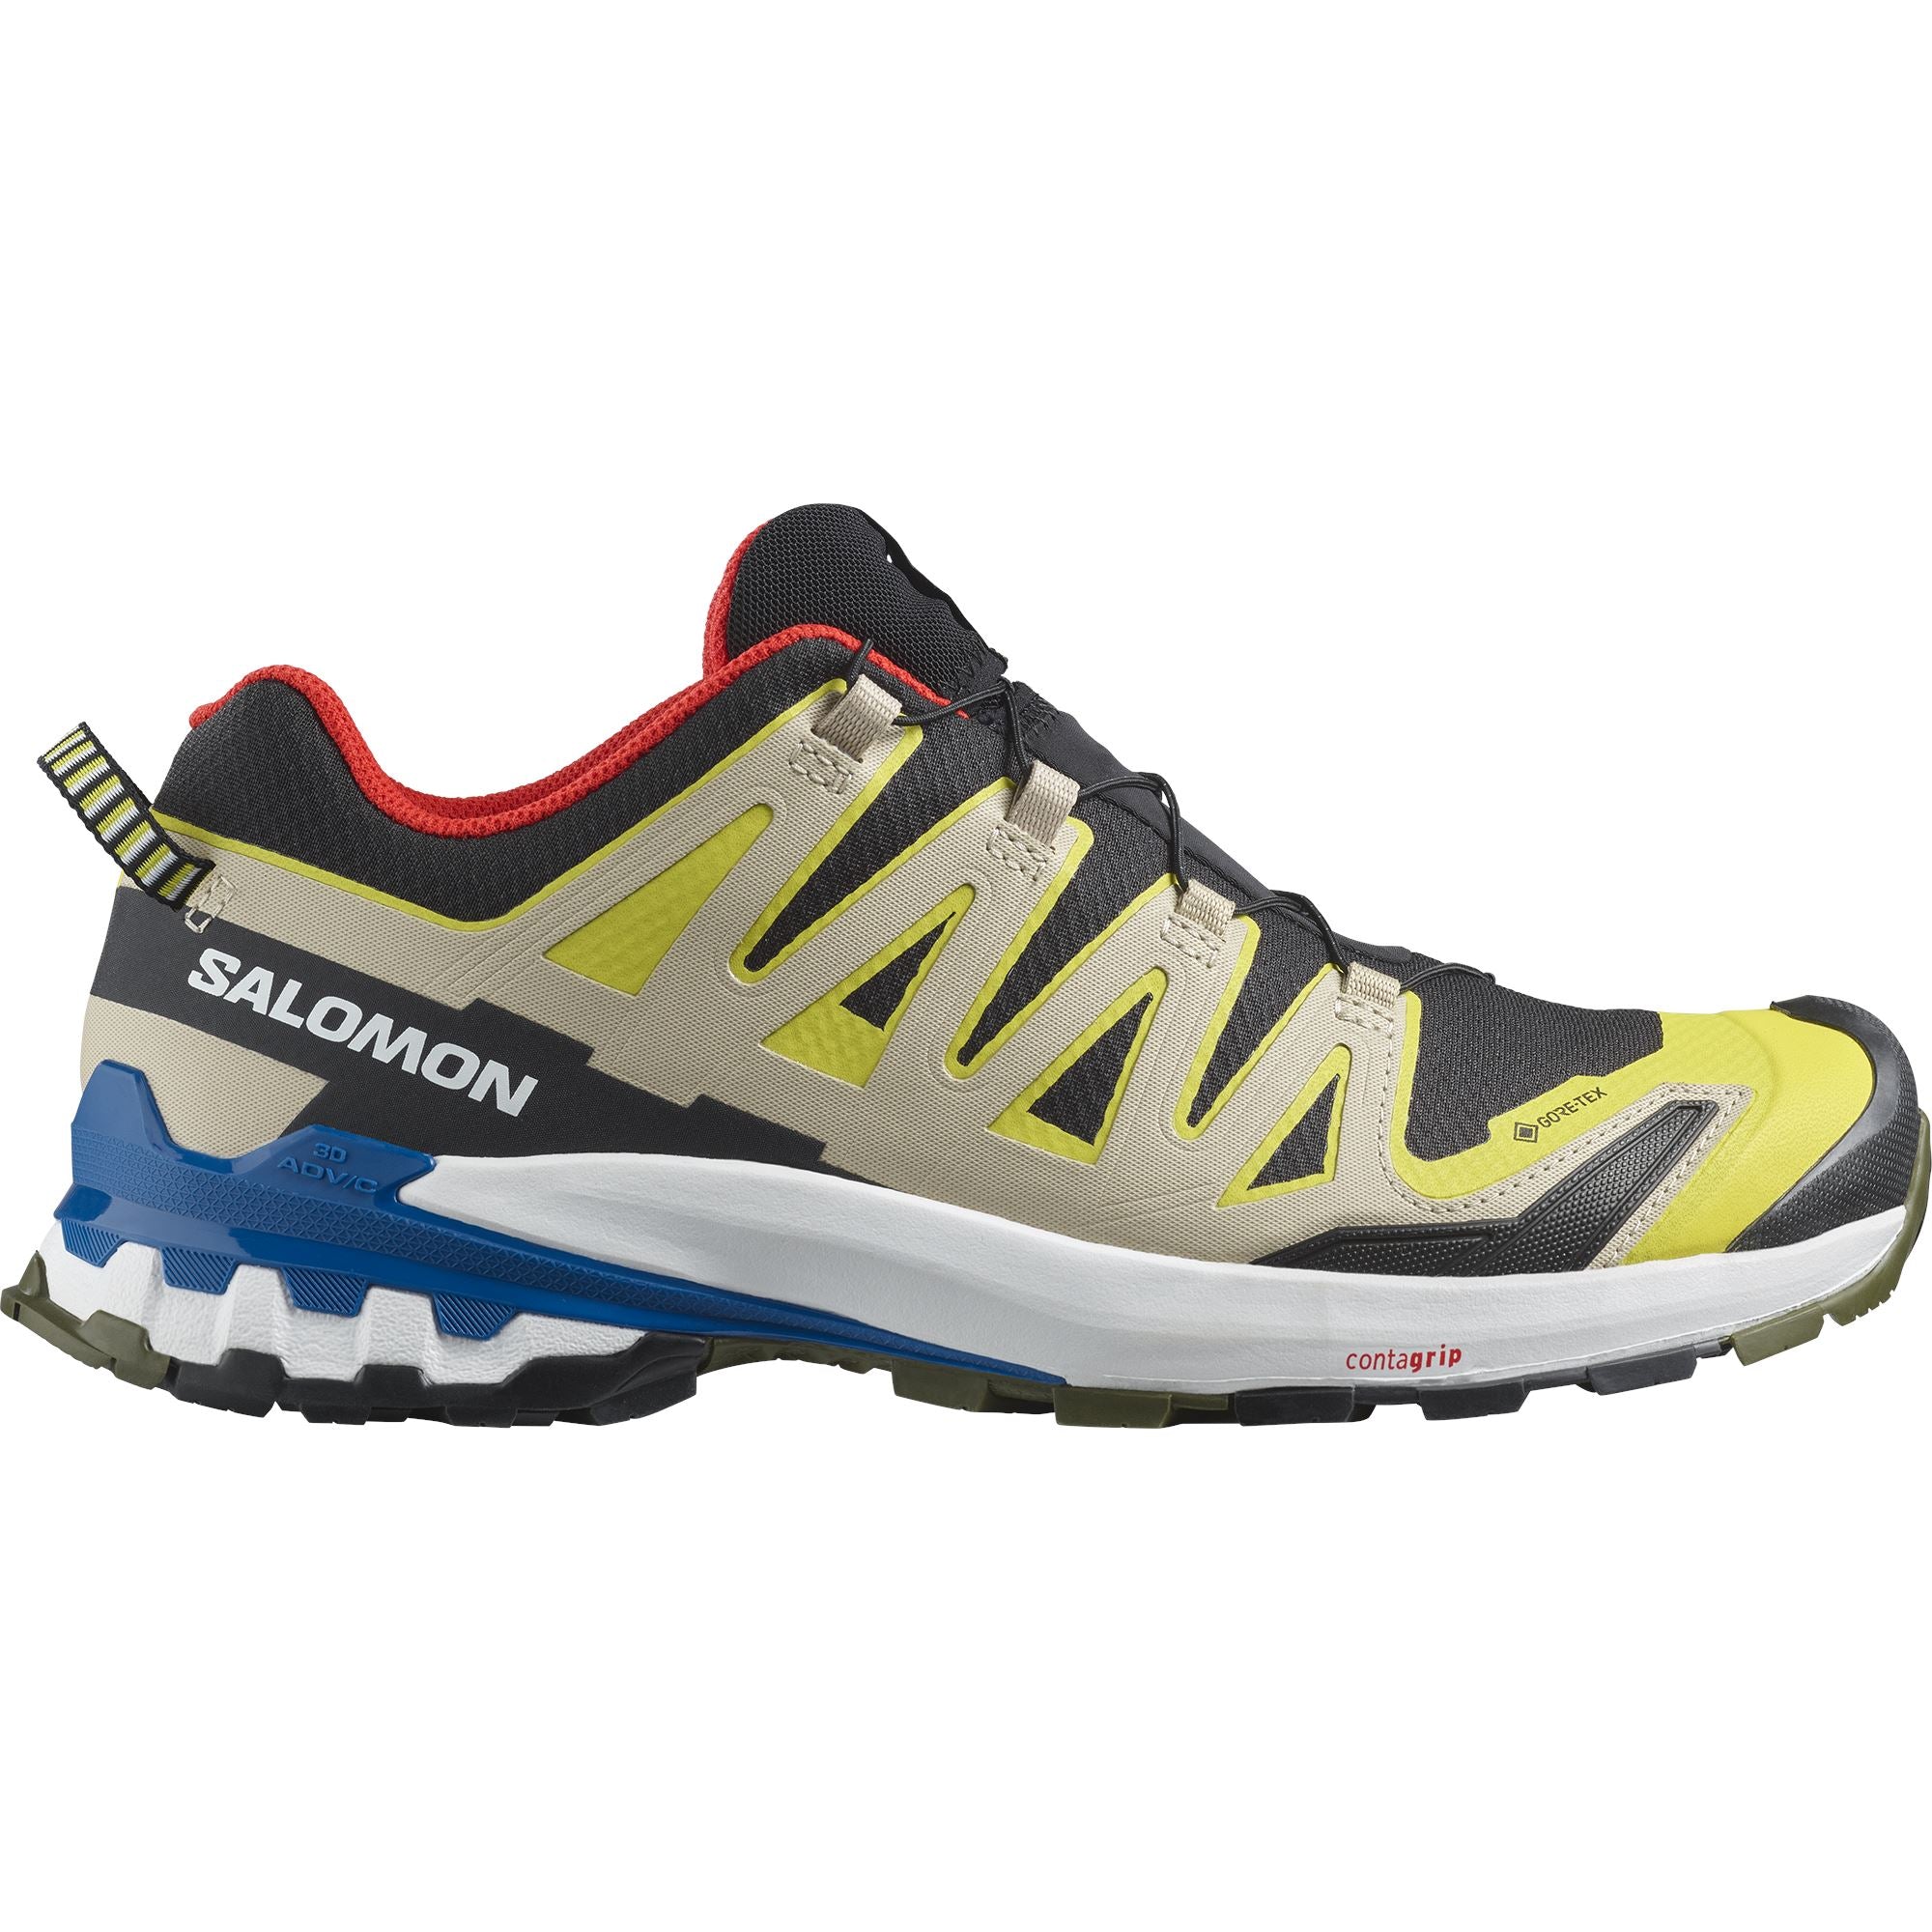 Salomon XA Pro 3D V9 GTX Men's Trail Running Shoes Black/Buttercap/Lapis Blue US 9 